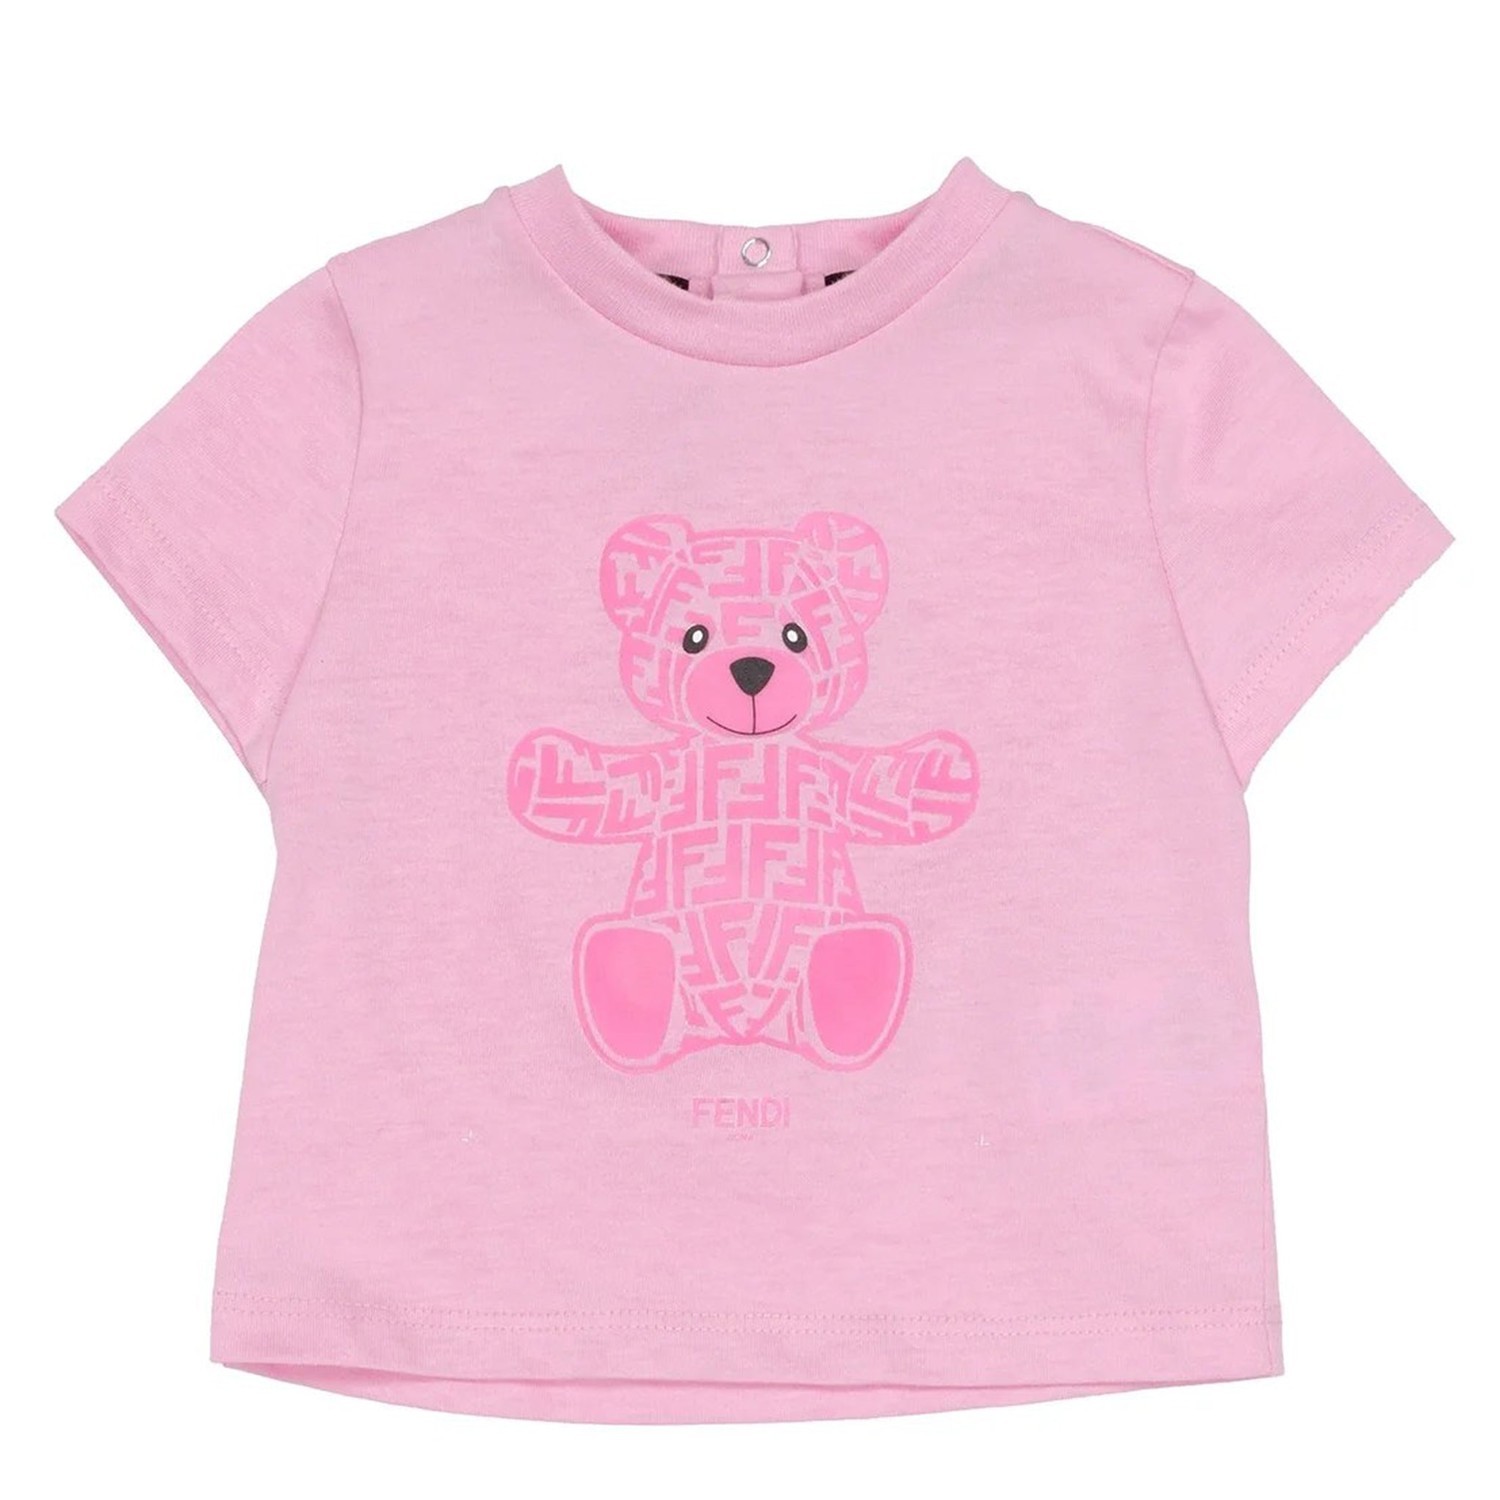 Fendi Baby Girls Teddy Bear T-shirt Pimk 12M